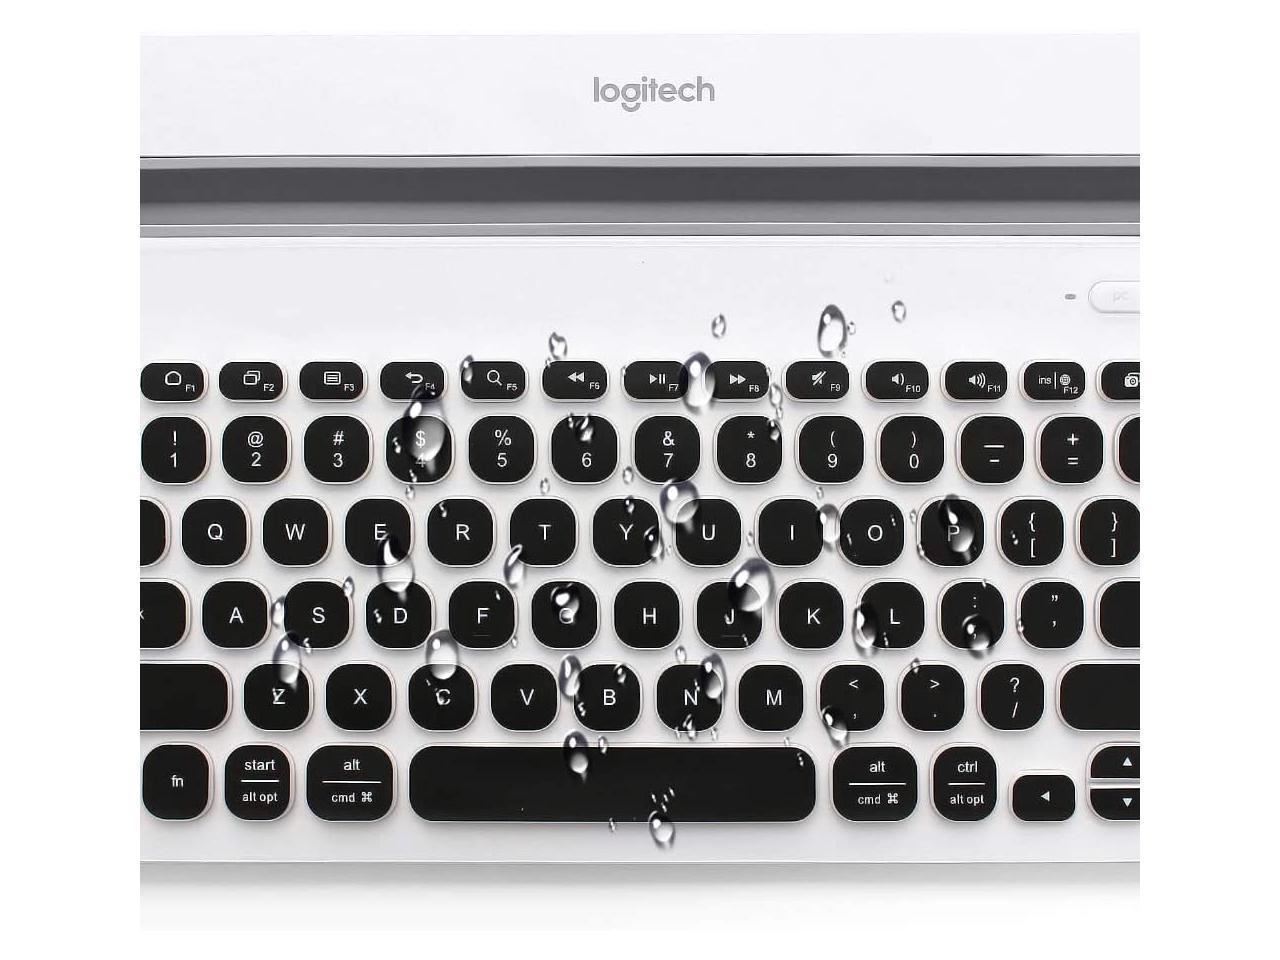 Silicone Keyboard Skin Cover for Logitech Bluetooth Multi-Device Keyboard K480 (Black)